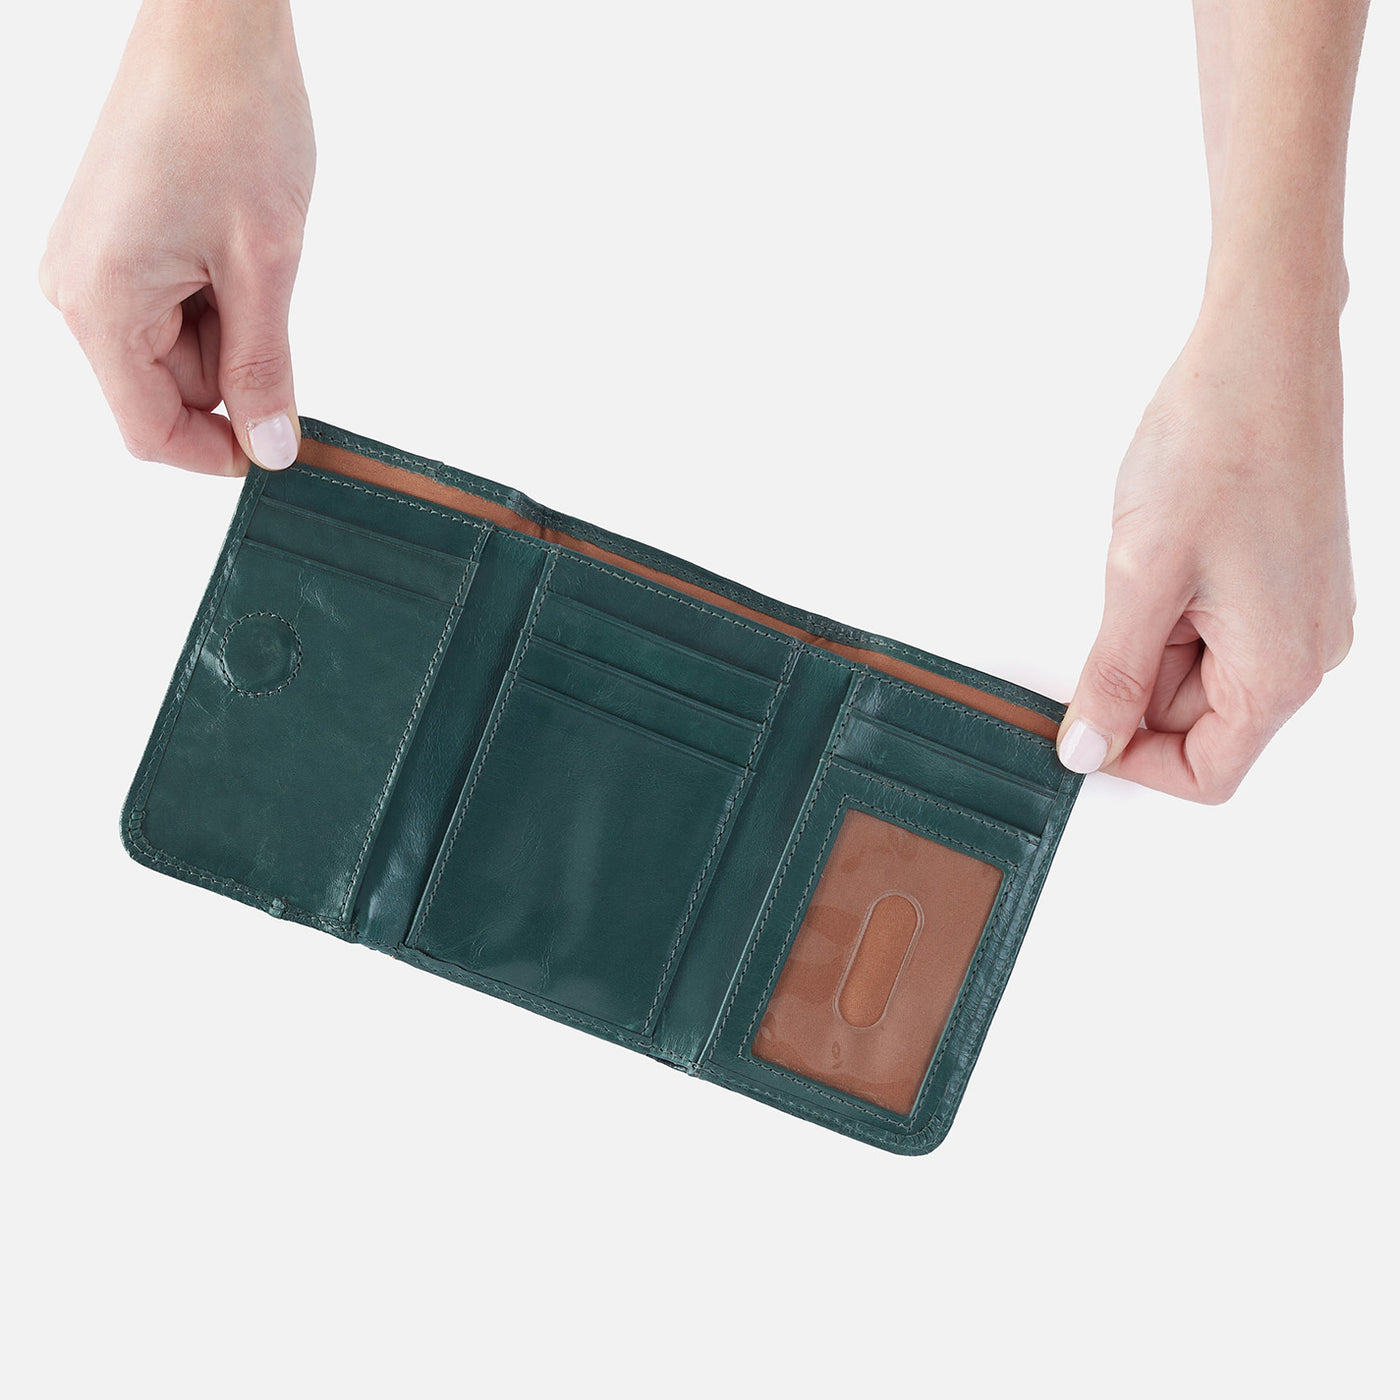 Jill Trifold Wallet in Polished Leather - Sage Leaf